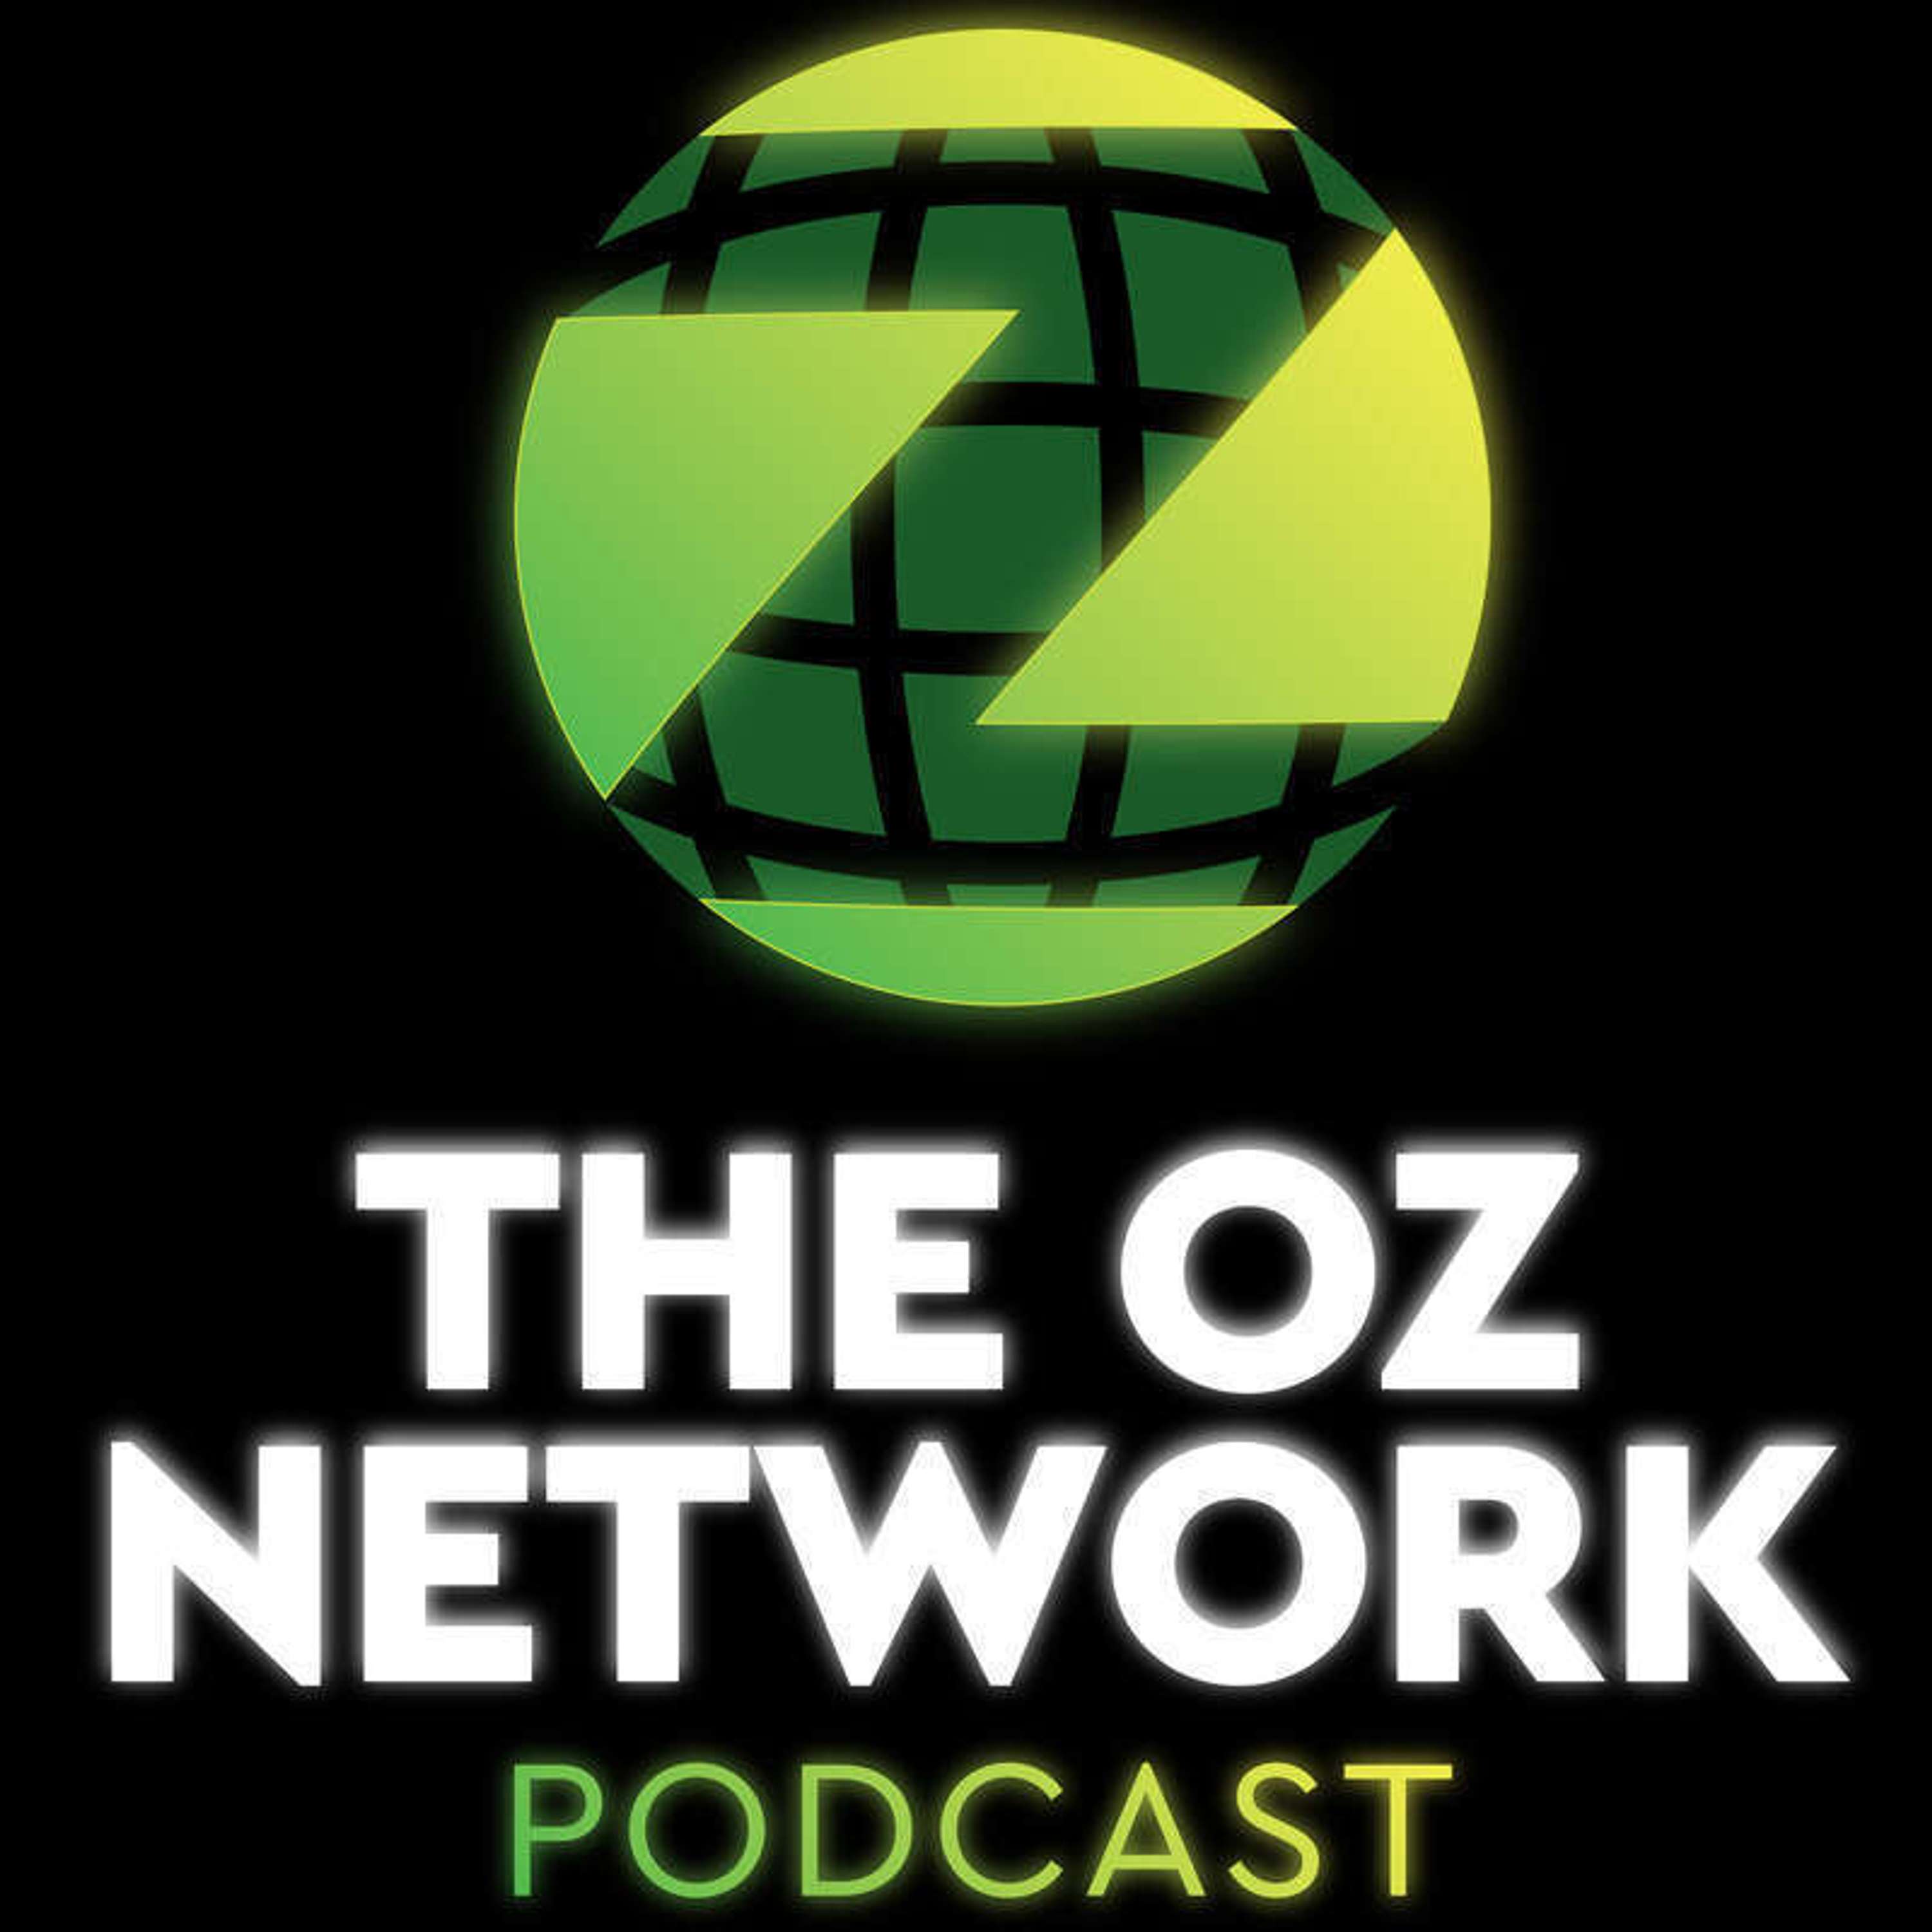 Scott Pilgrim Takes Off Season 1, Episode 7 '2 Scott 2 Pilgrim' Recap - The Oz Network TV